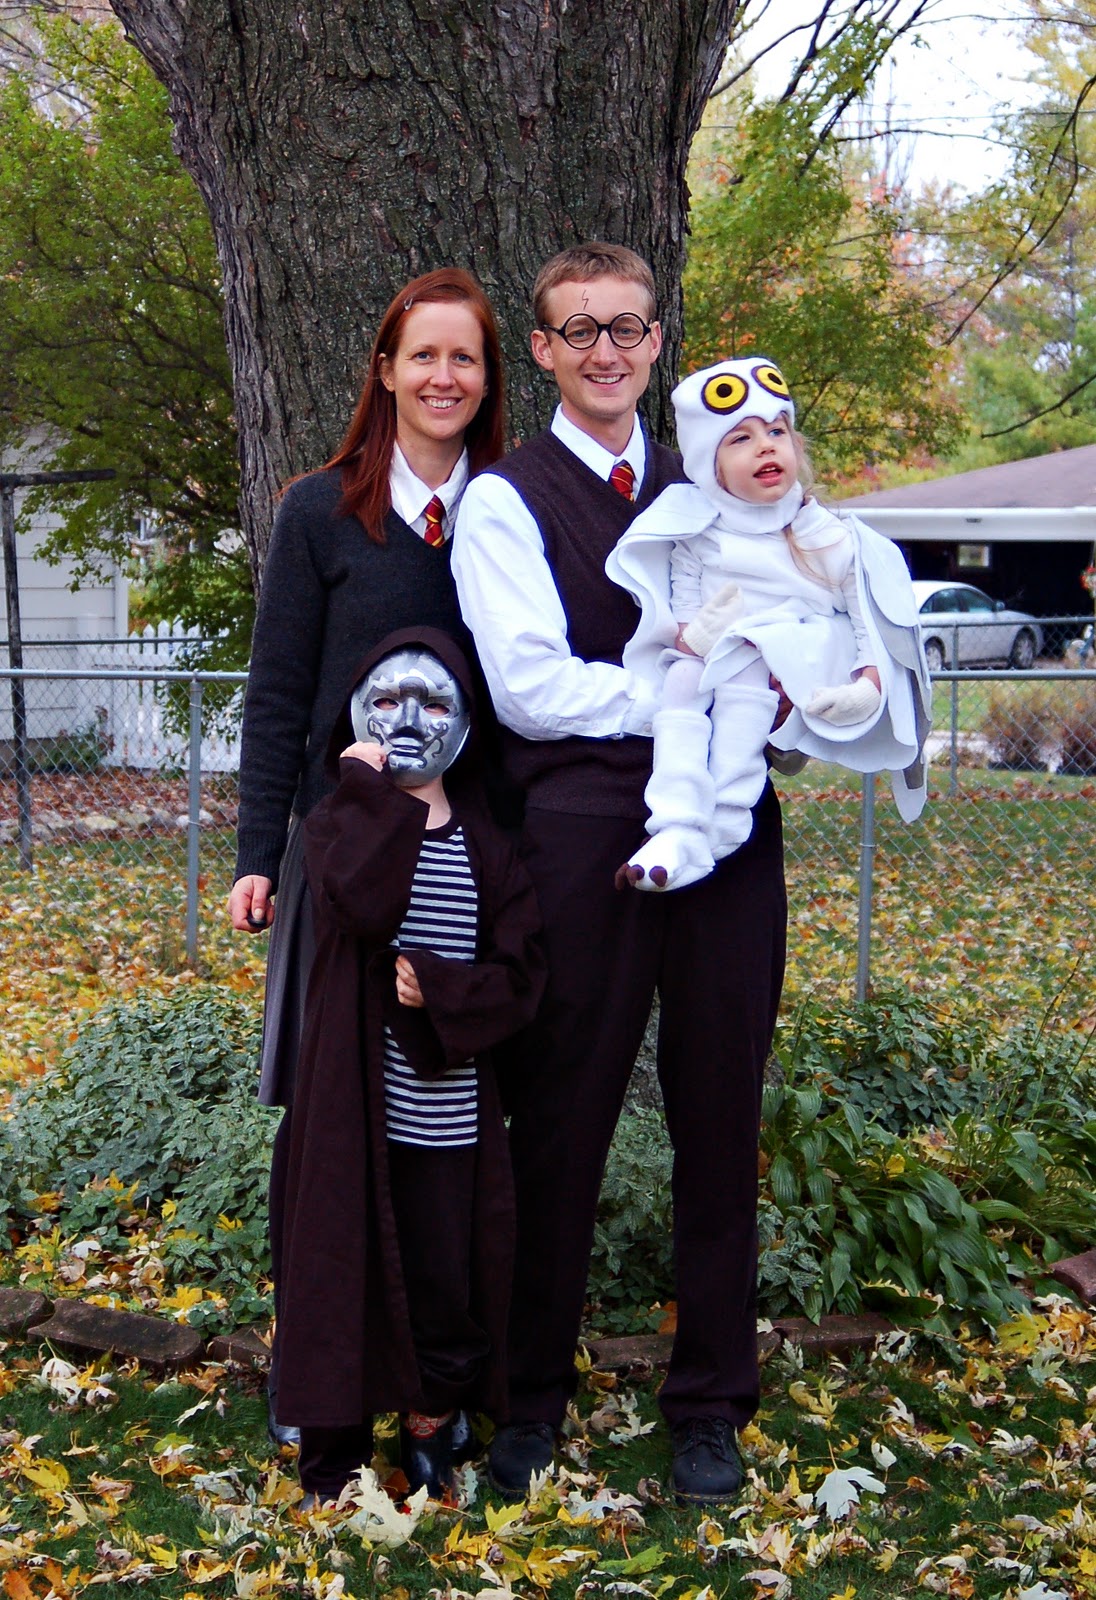 Family Harry Potter Halloween Costume